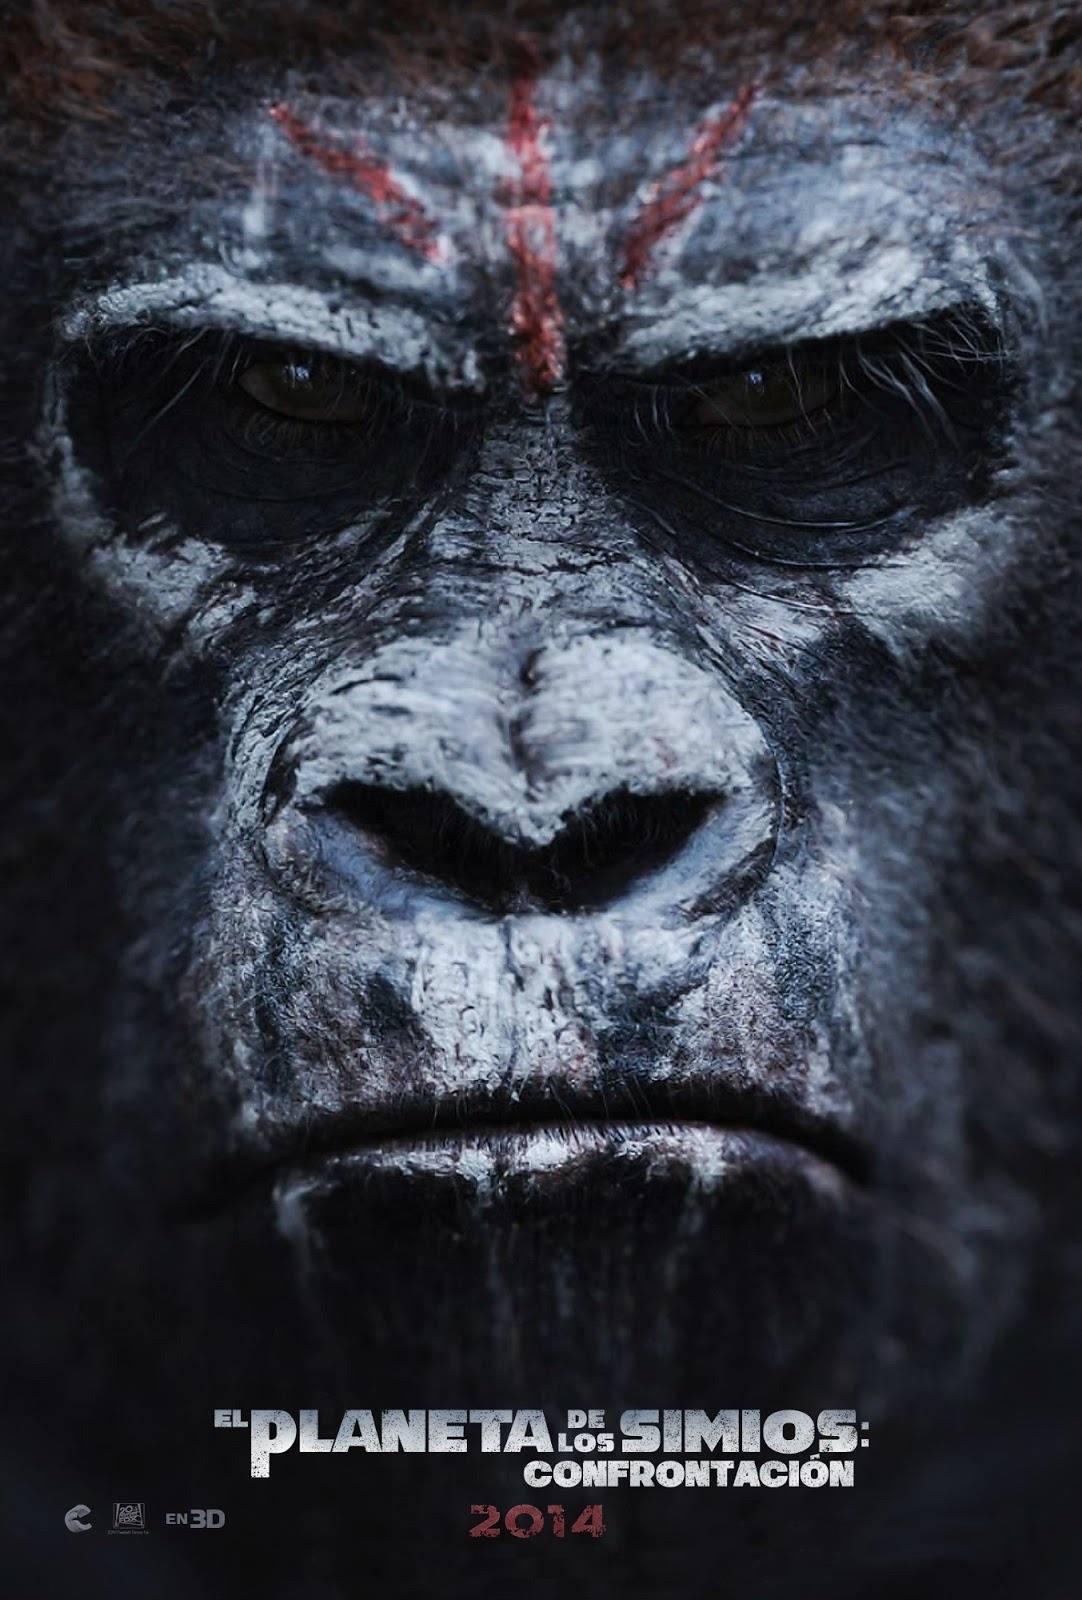 Постер фильма Планета обезьян: Революция | Dawn of the Planet of the Apes